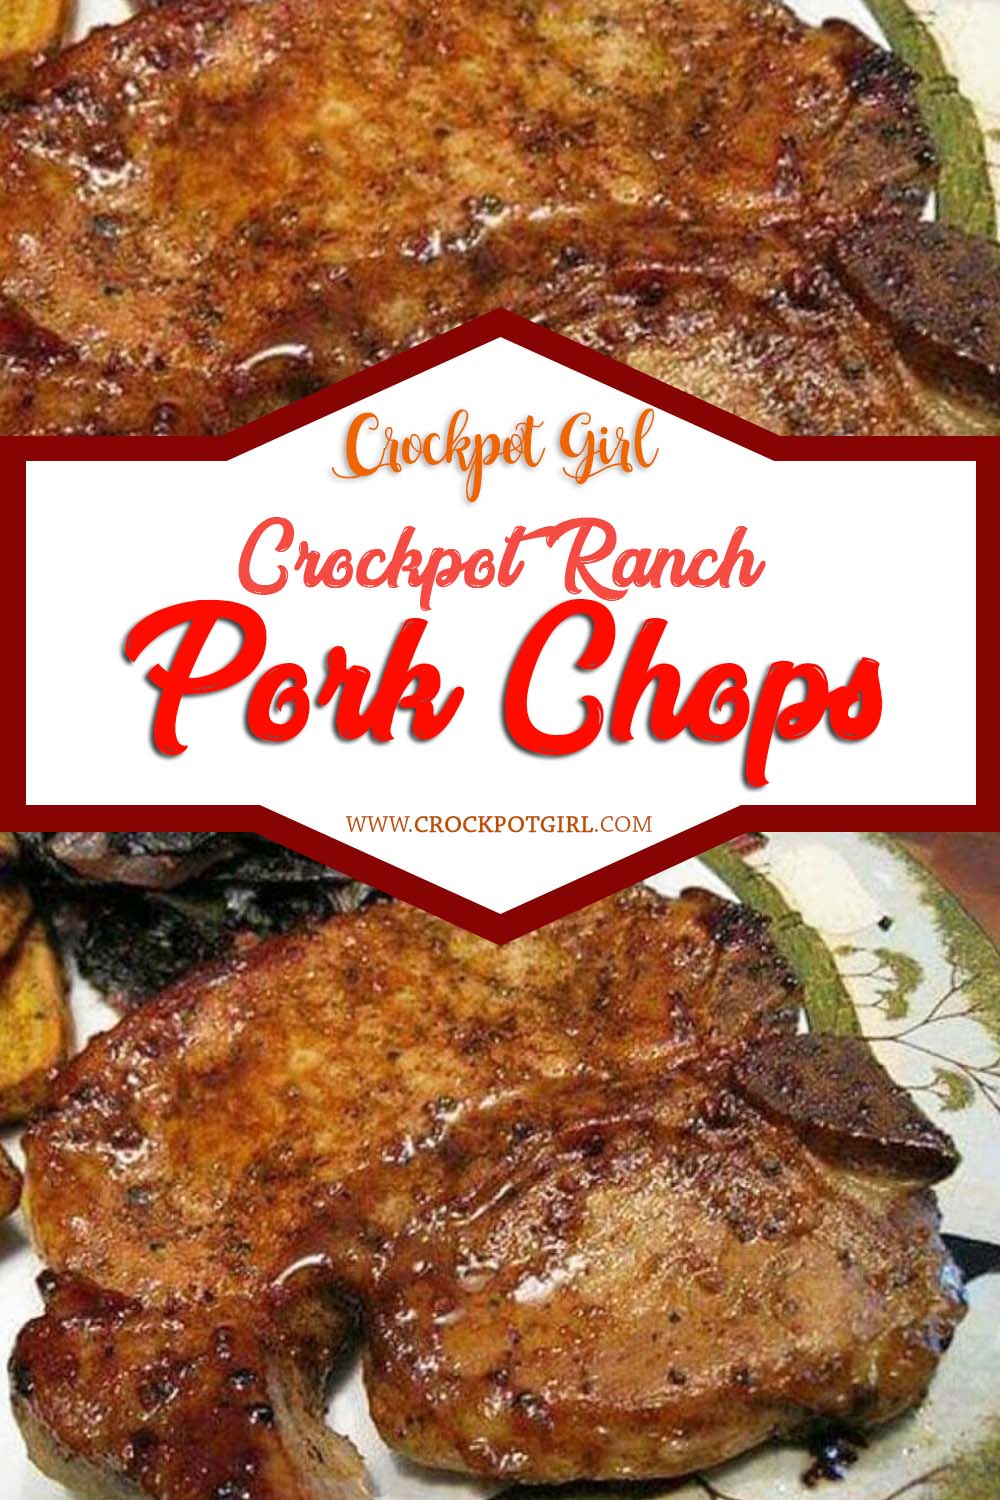 CROCKPOT RANCH PORK CHOPS - Crockpot Girl